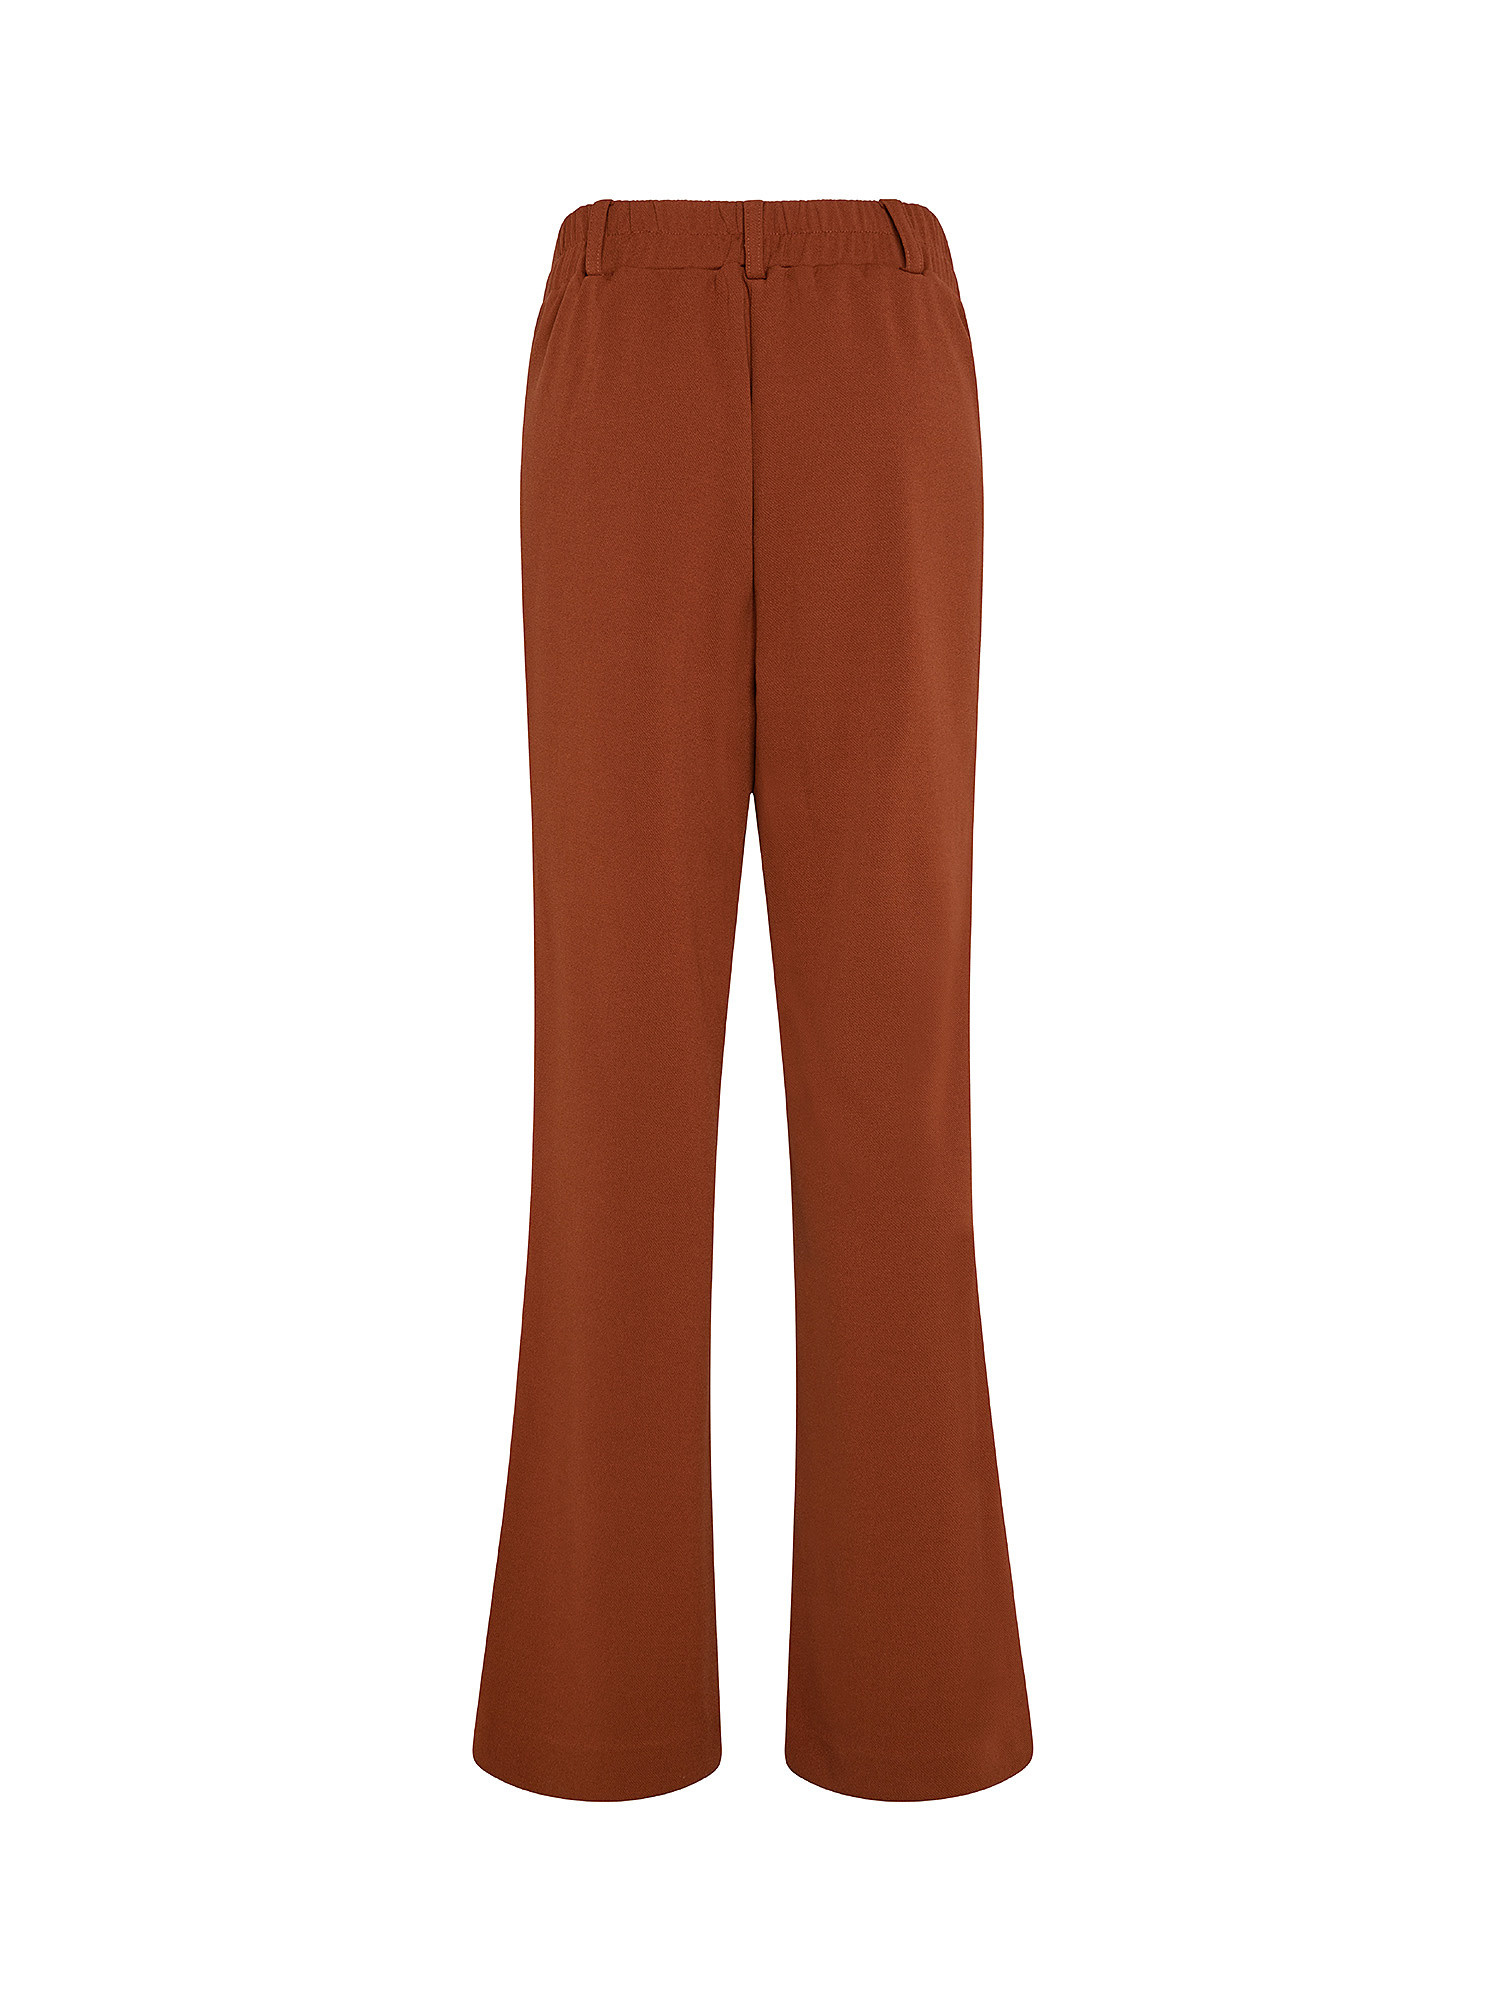 Pantalone con elastico, Marrone chiaro, large image number 1